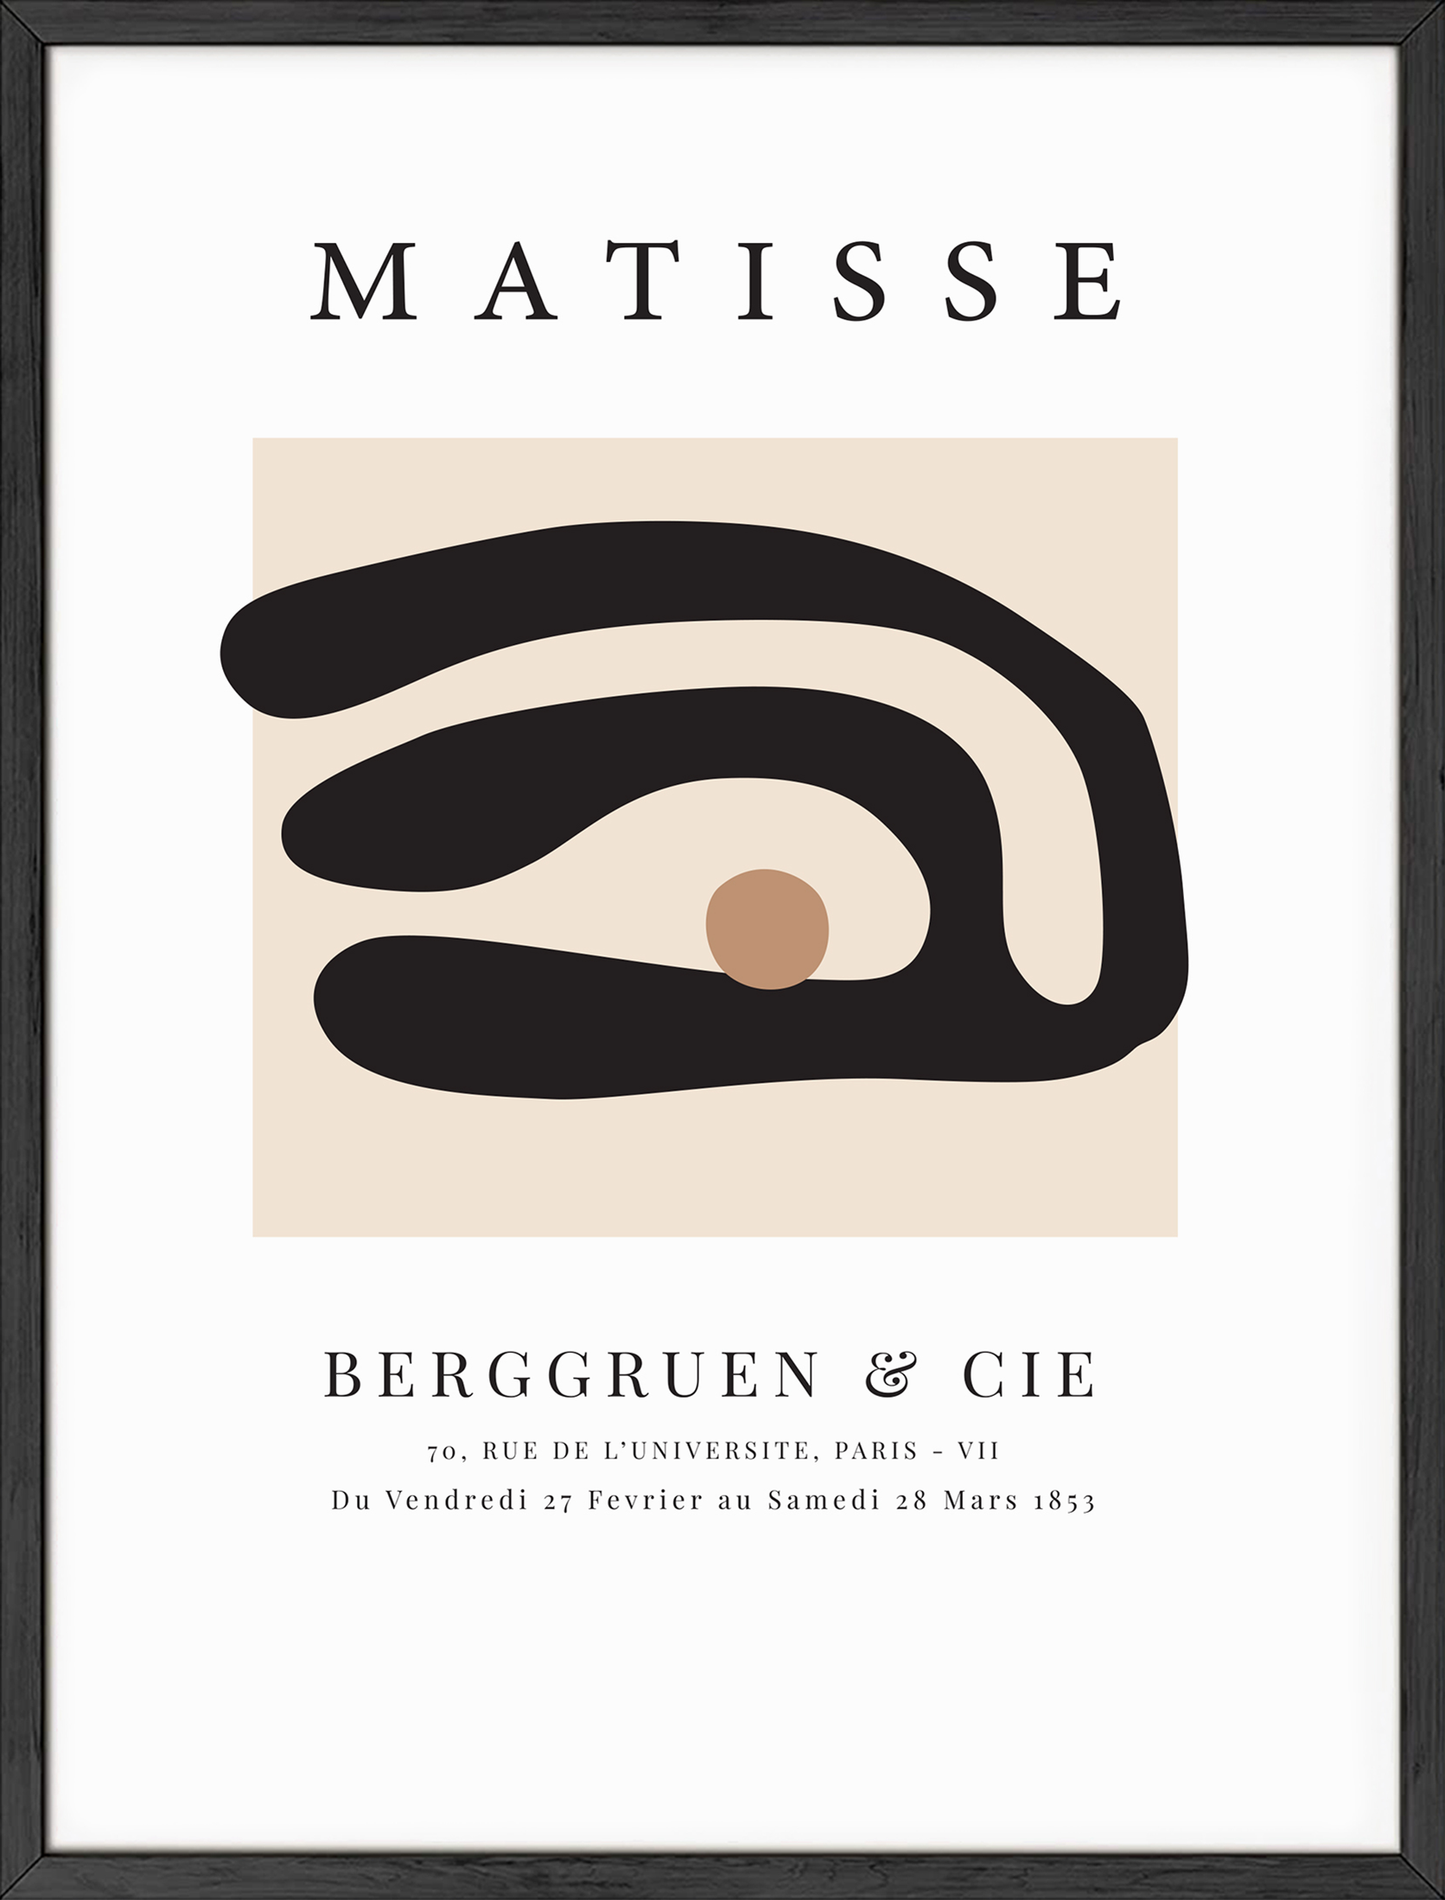 Matisse organic shape